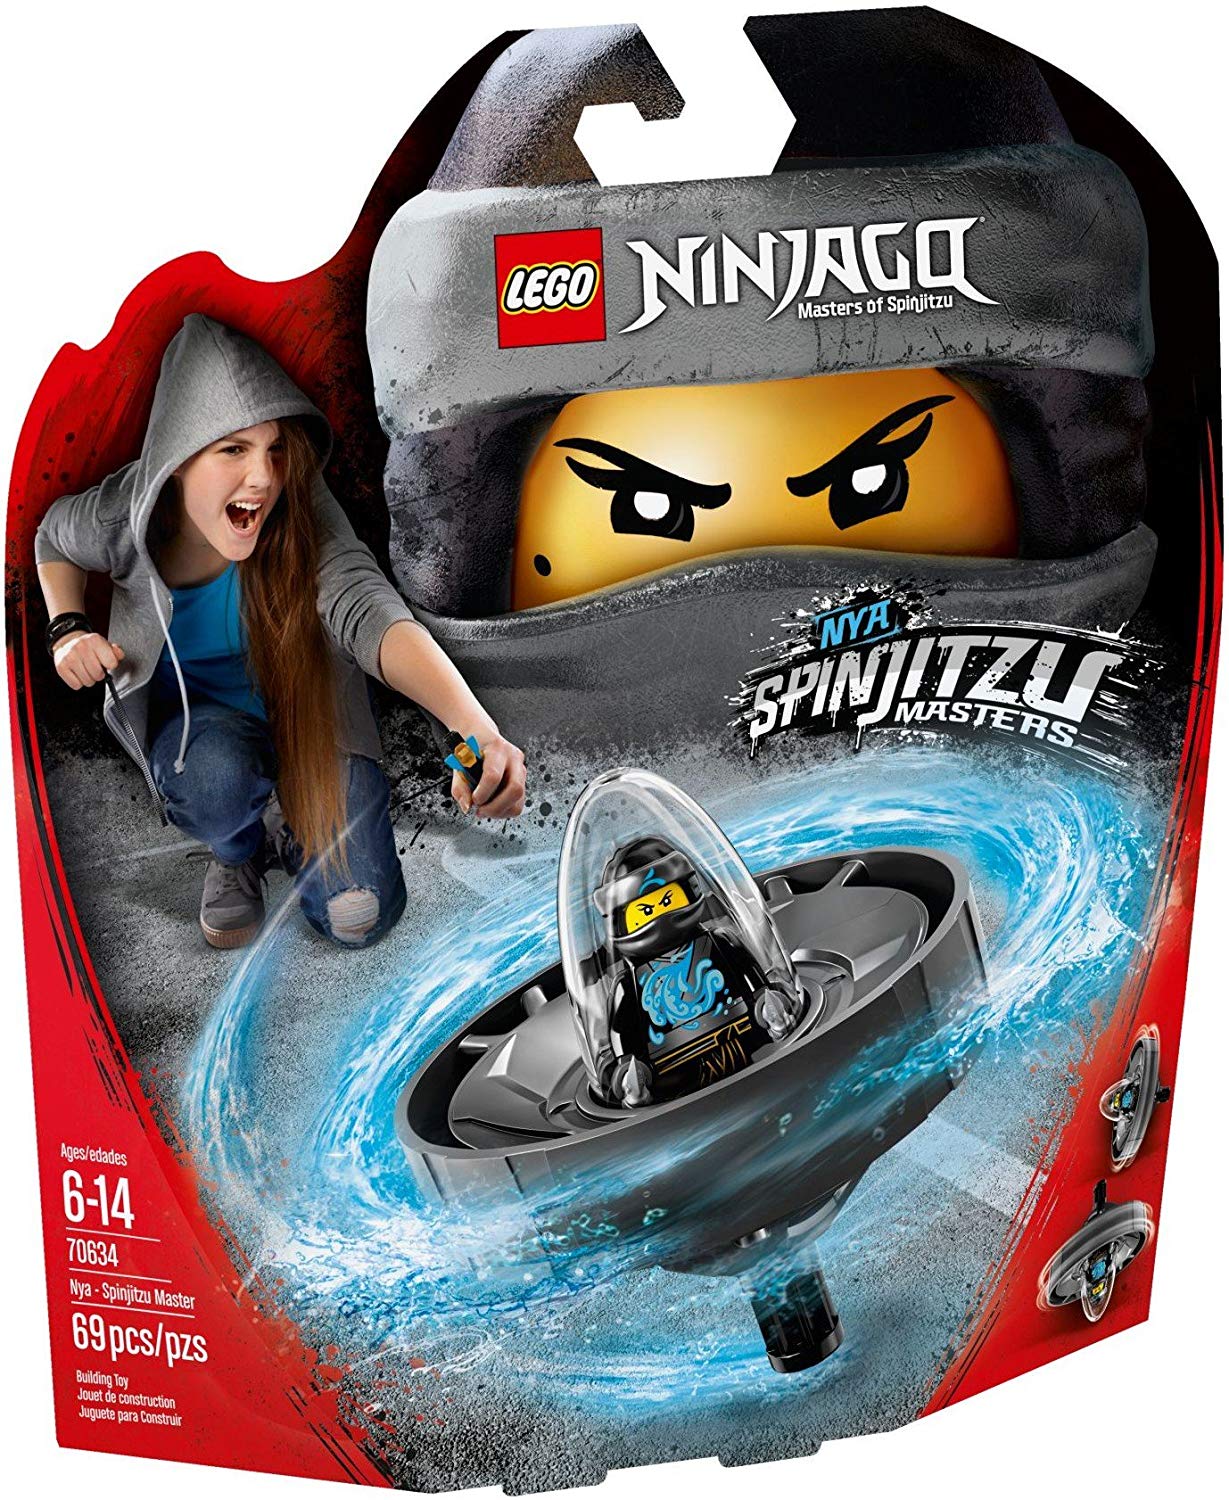 Lego Ninjago Spinjitzu Master Cole Entertainment Toy, Colourful